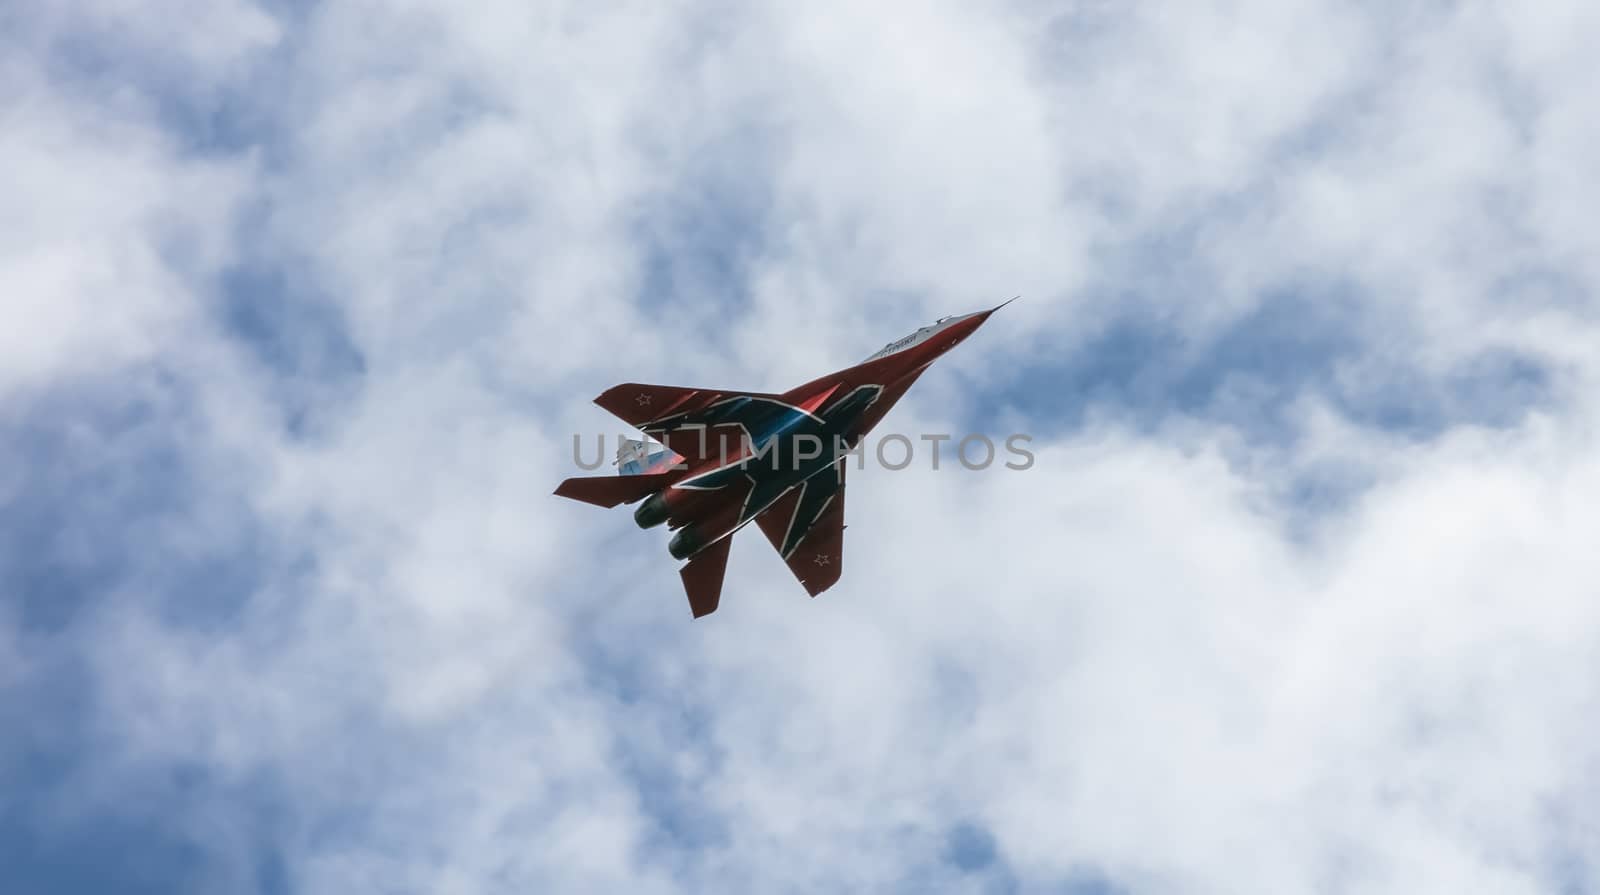 Strizhi MIG-29 fighter jet flying during aeroshow by DamantisZ